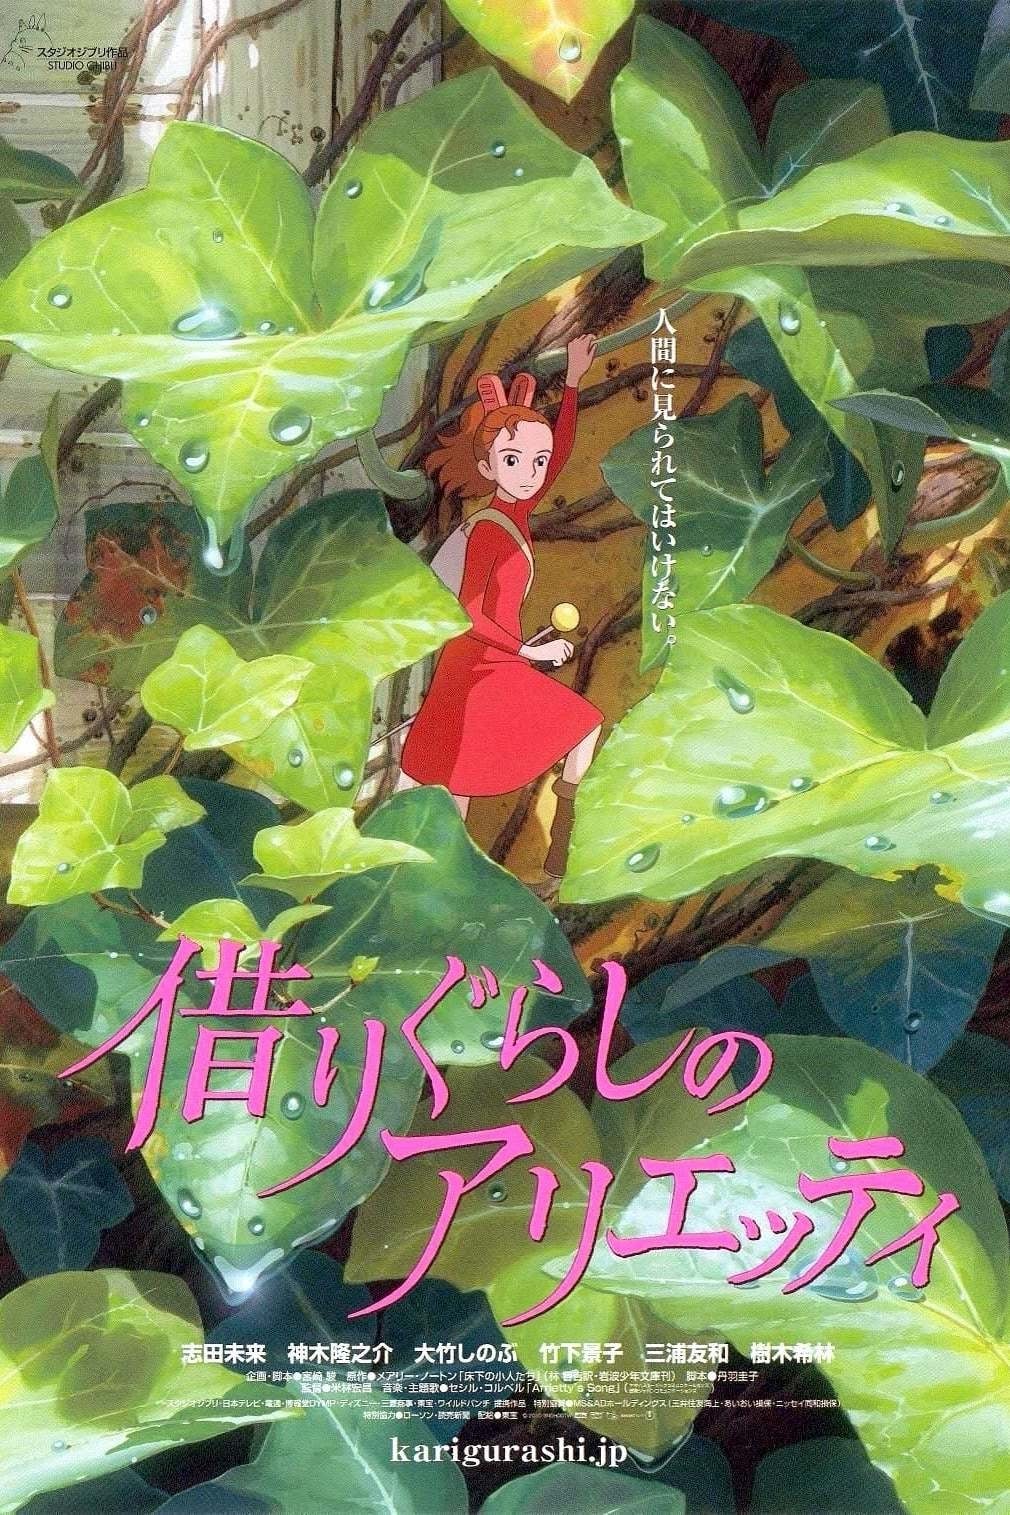 Banner Phim Thế Giới Bí Mật Của Arrietty (The Secret World of Arrietty)